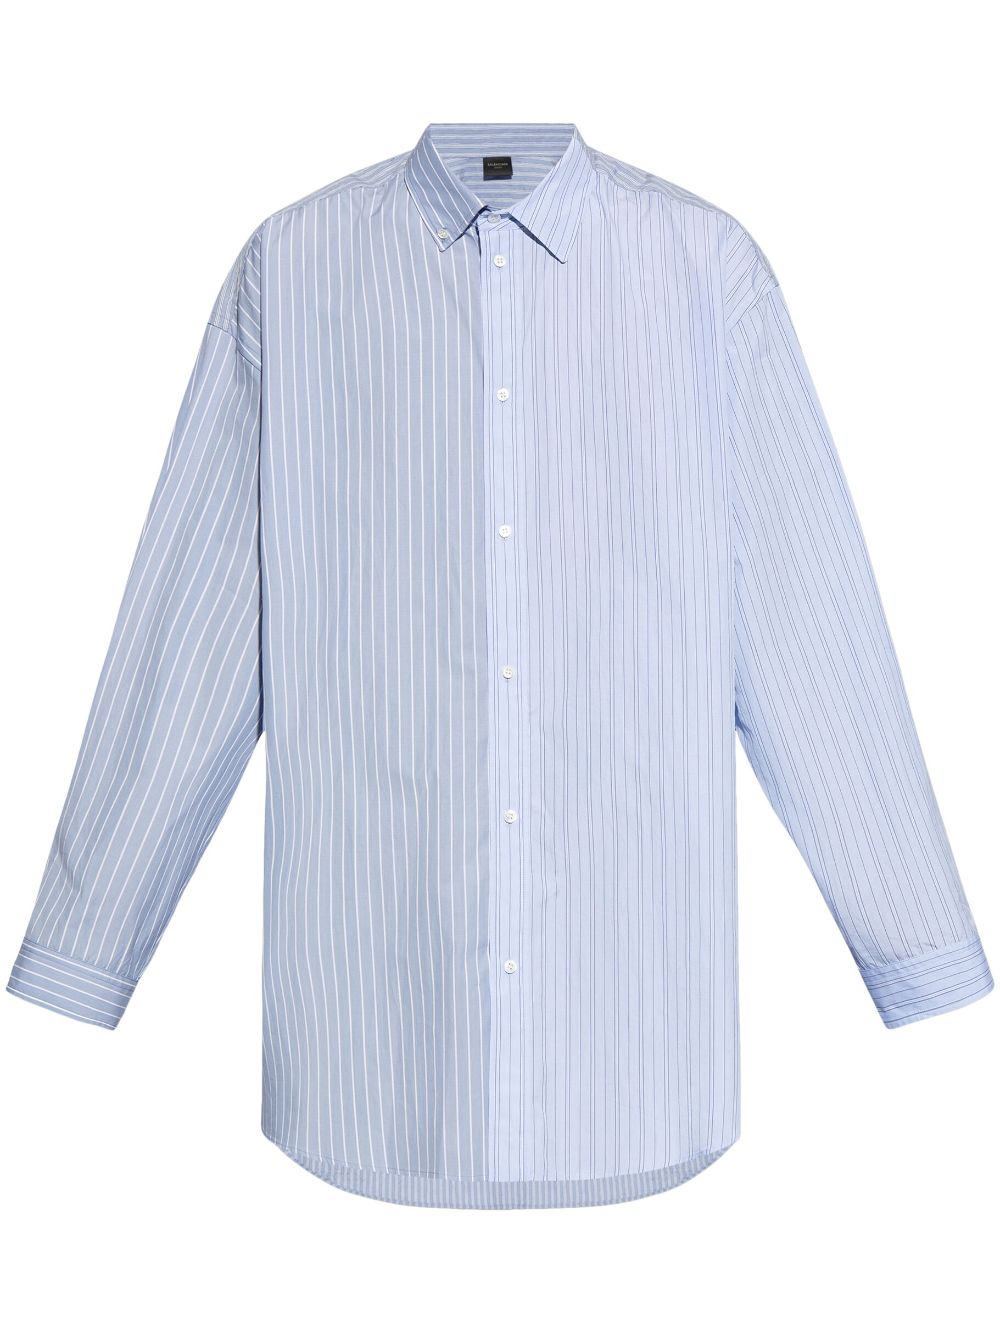 Balenciaga Striped Cotton Shirt In Blue